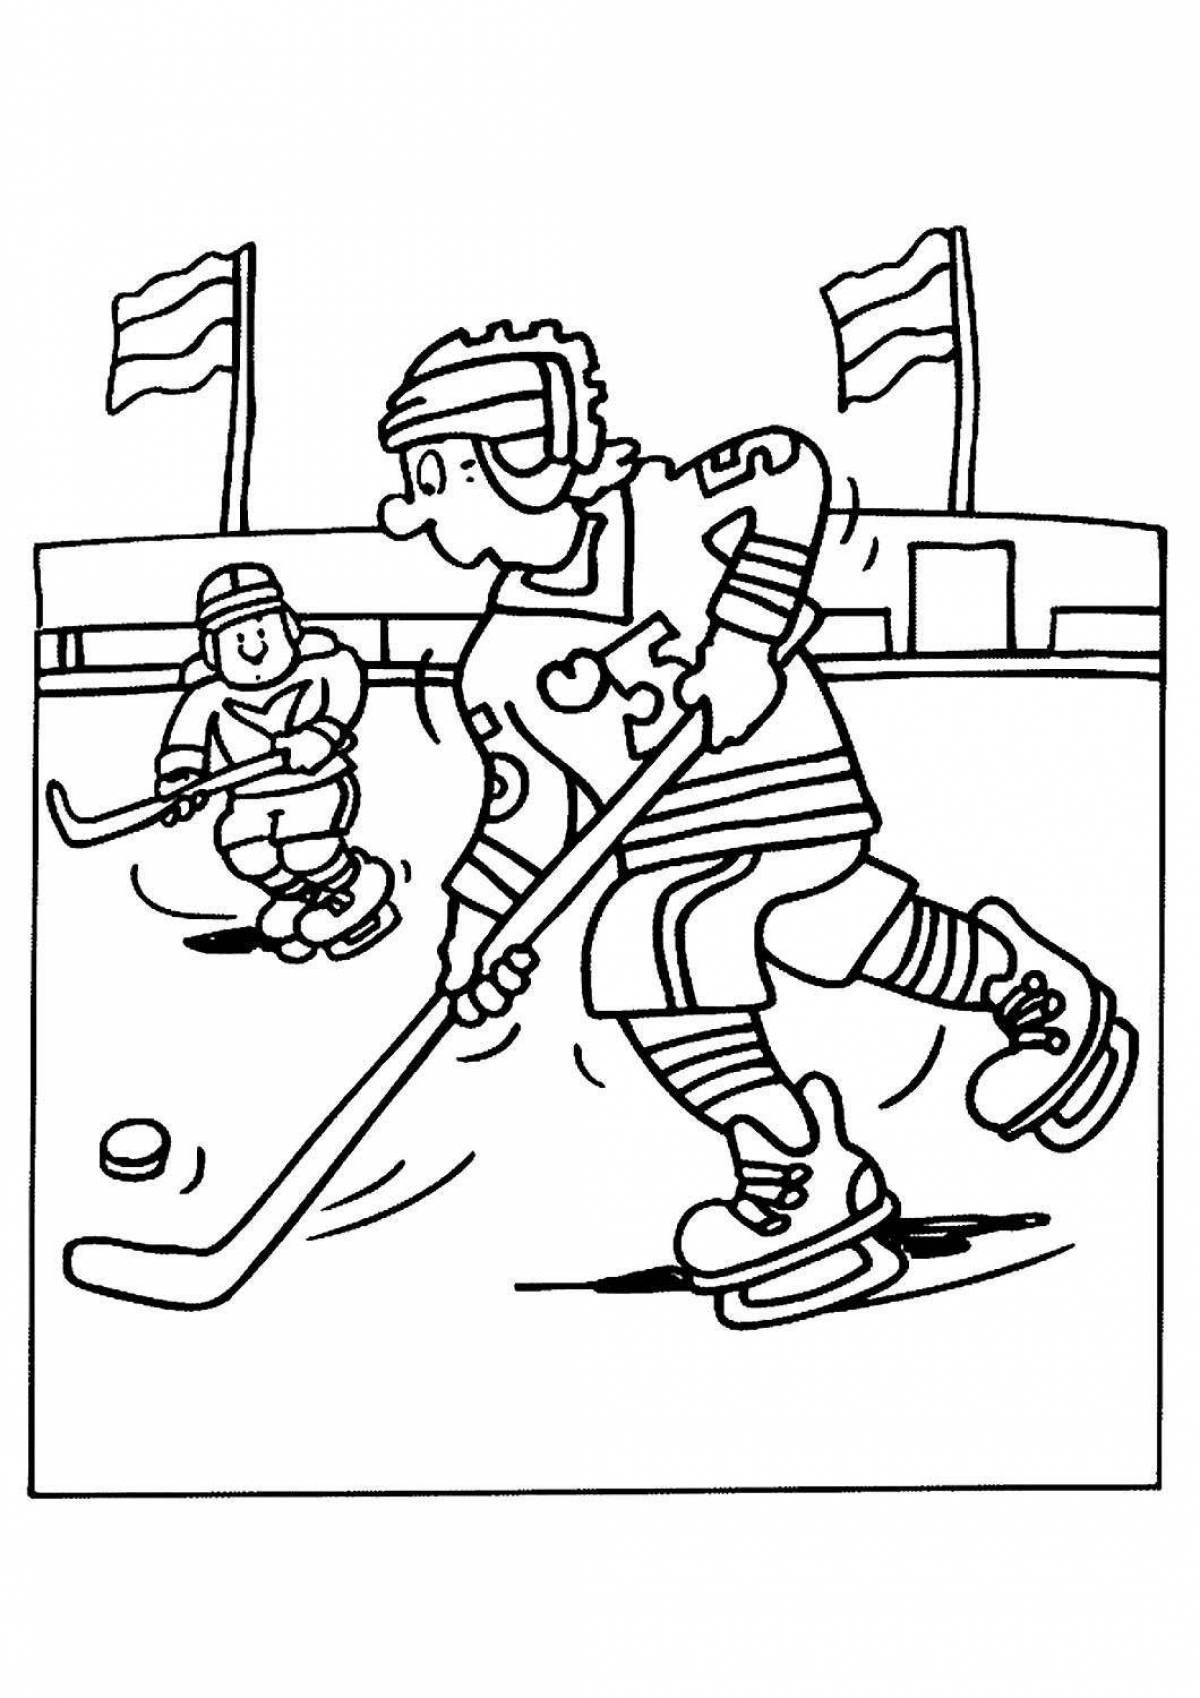 Joyful hockey coloring book for kids